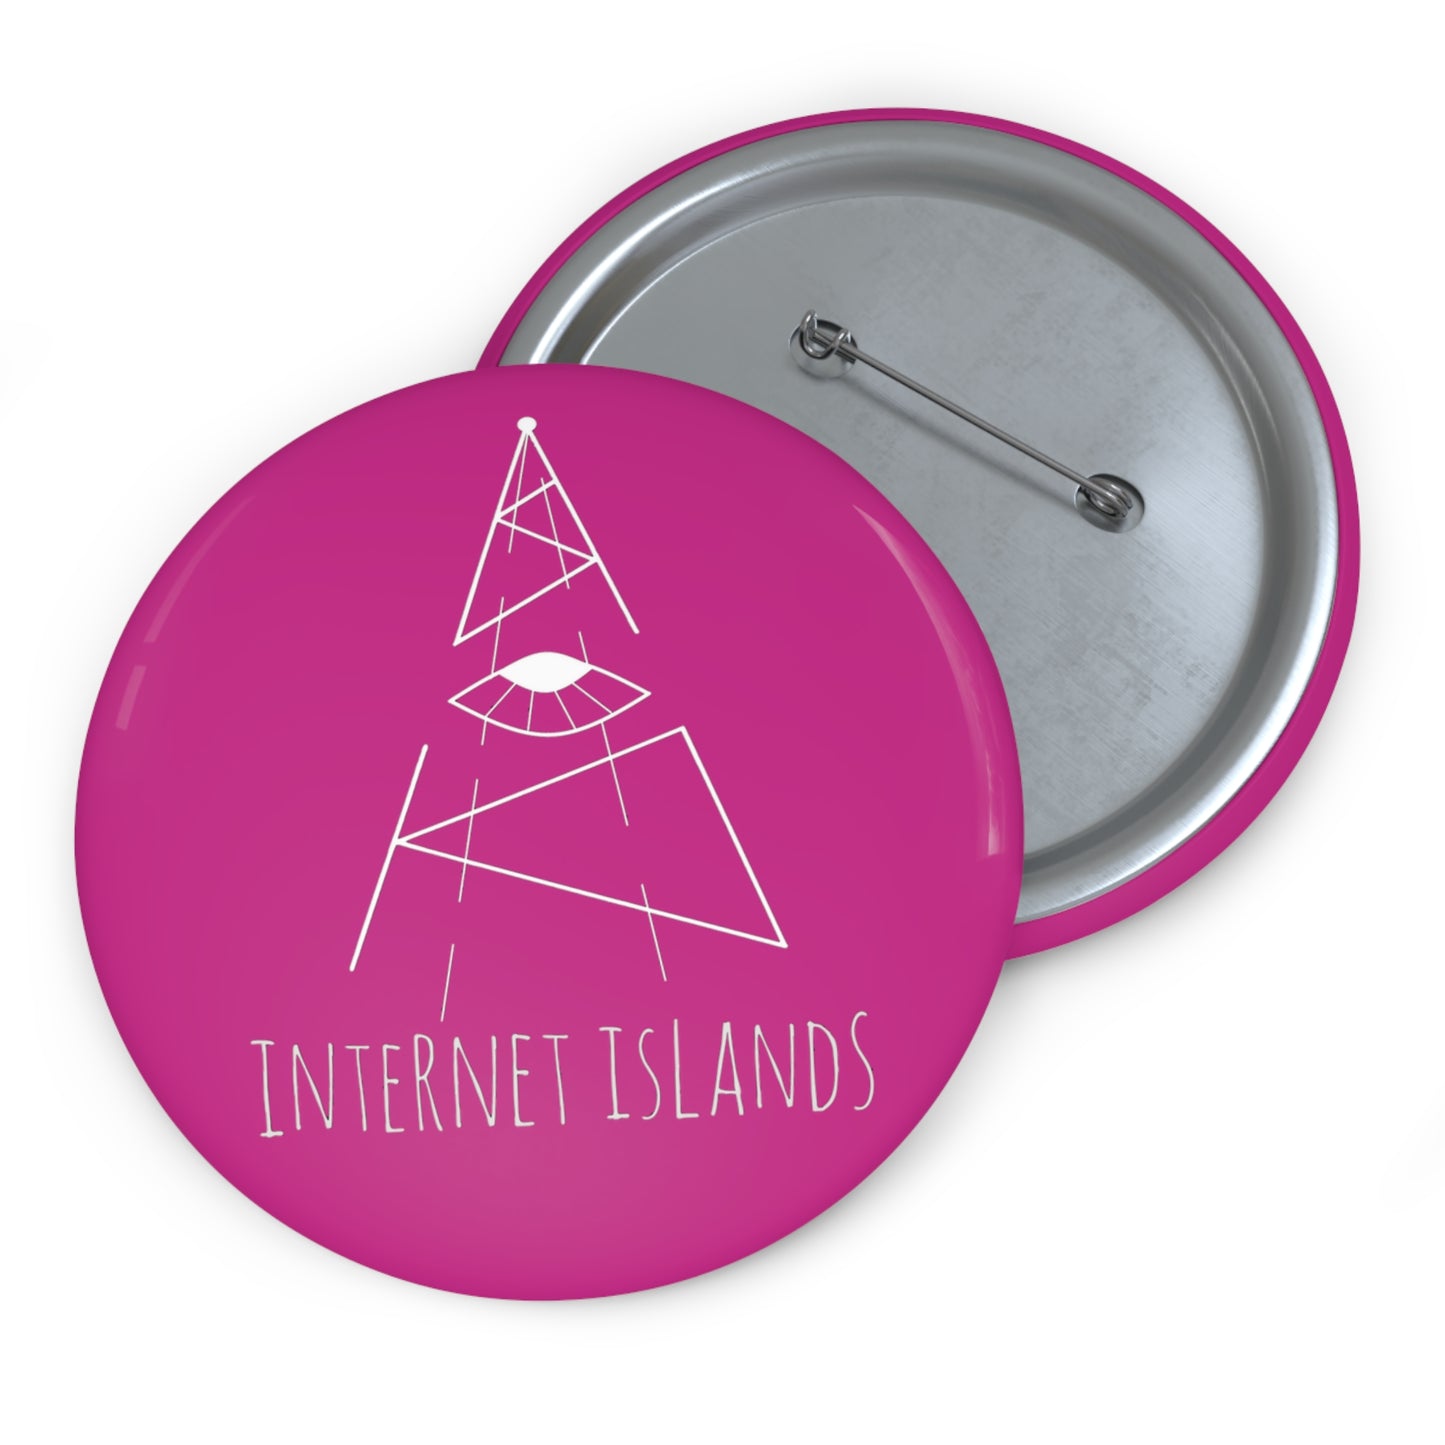 Internet Islands Pin - Button (PINK)